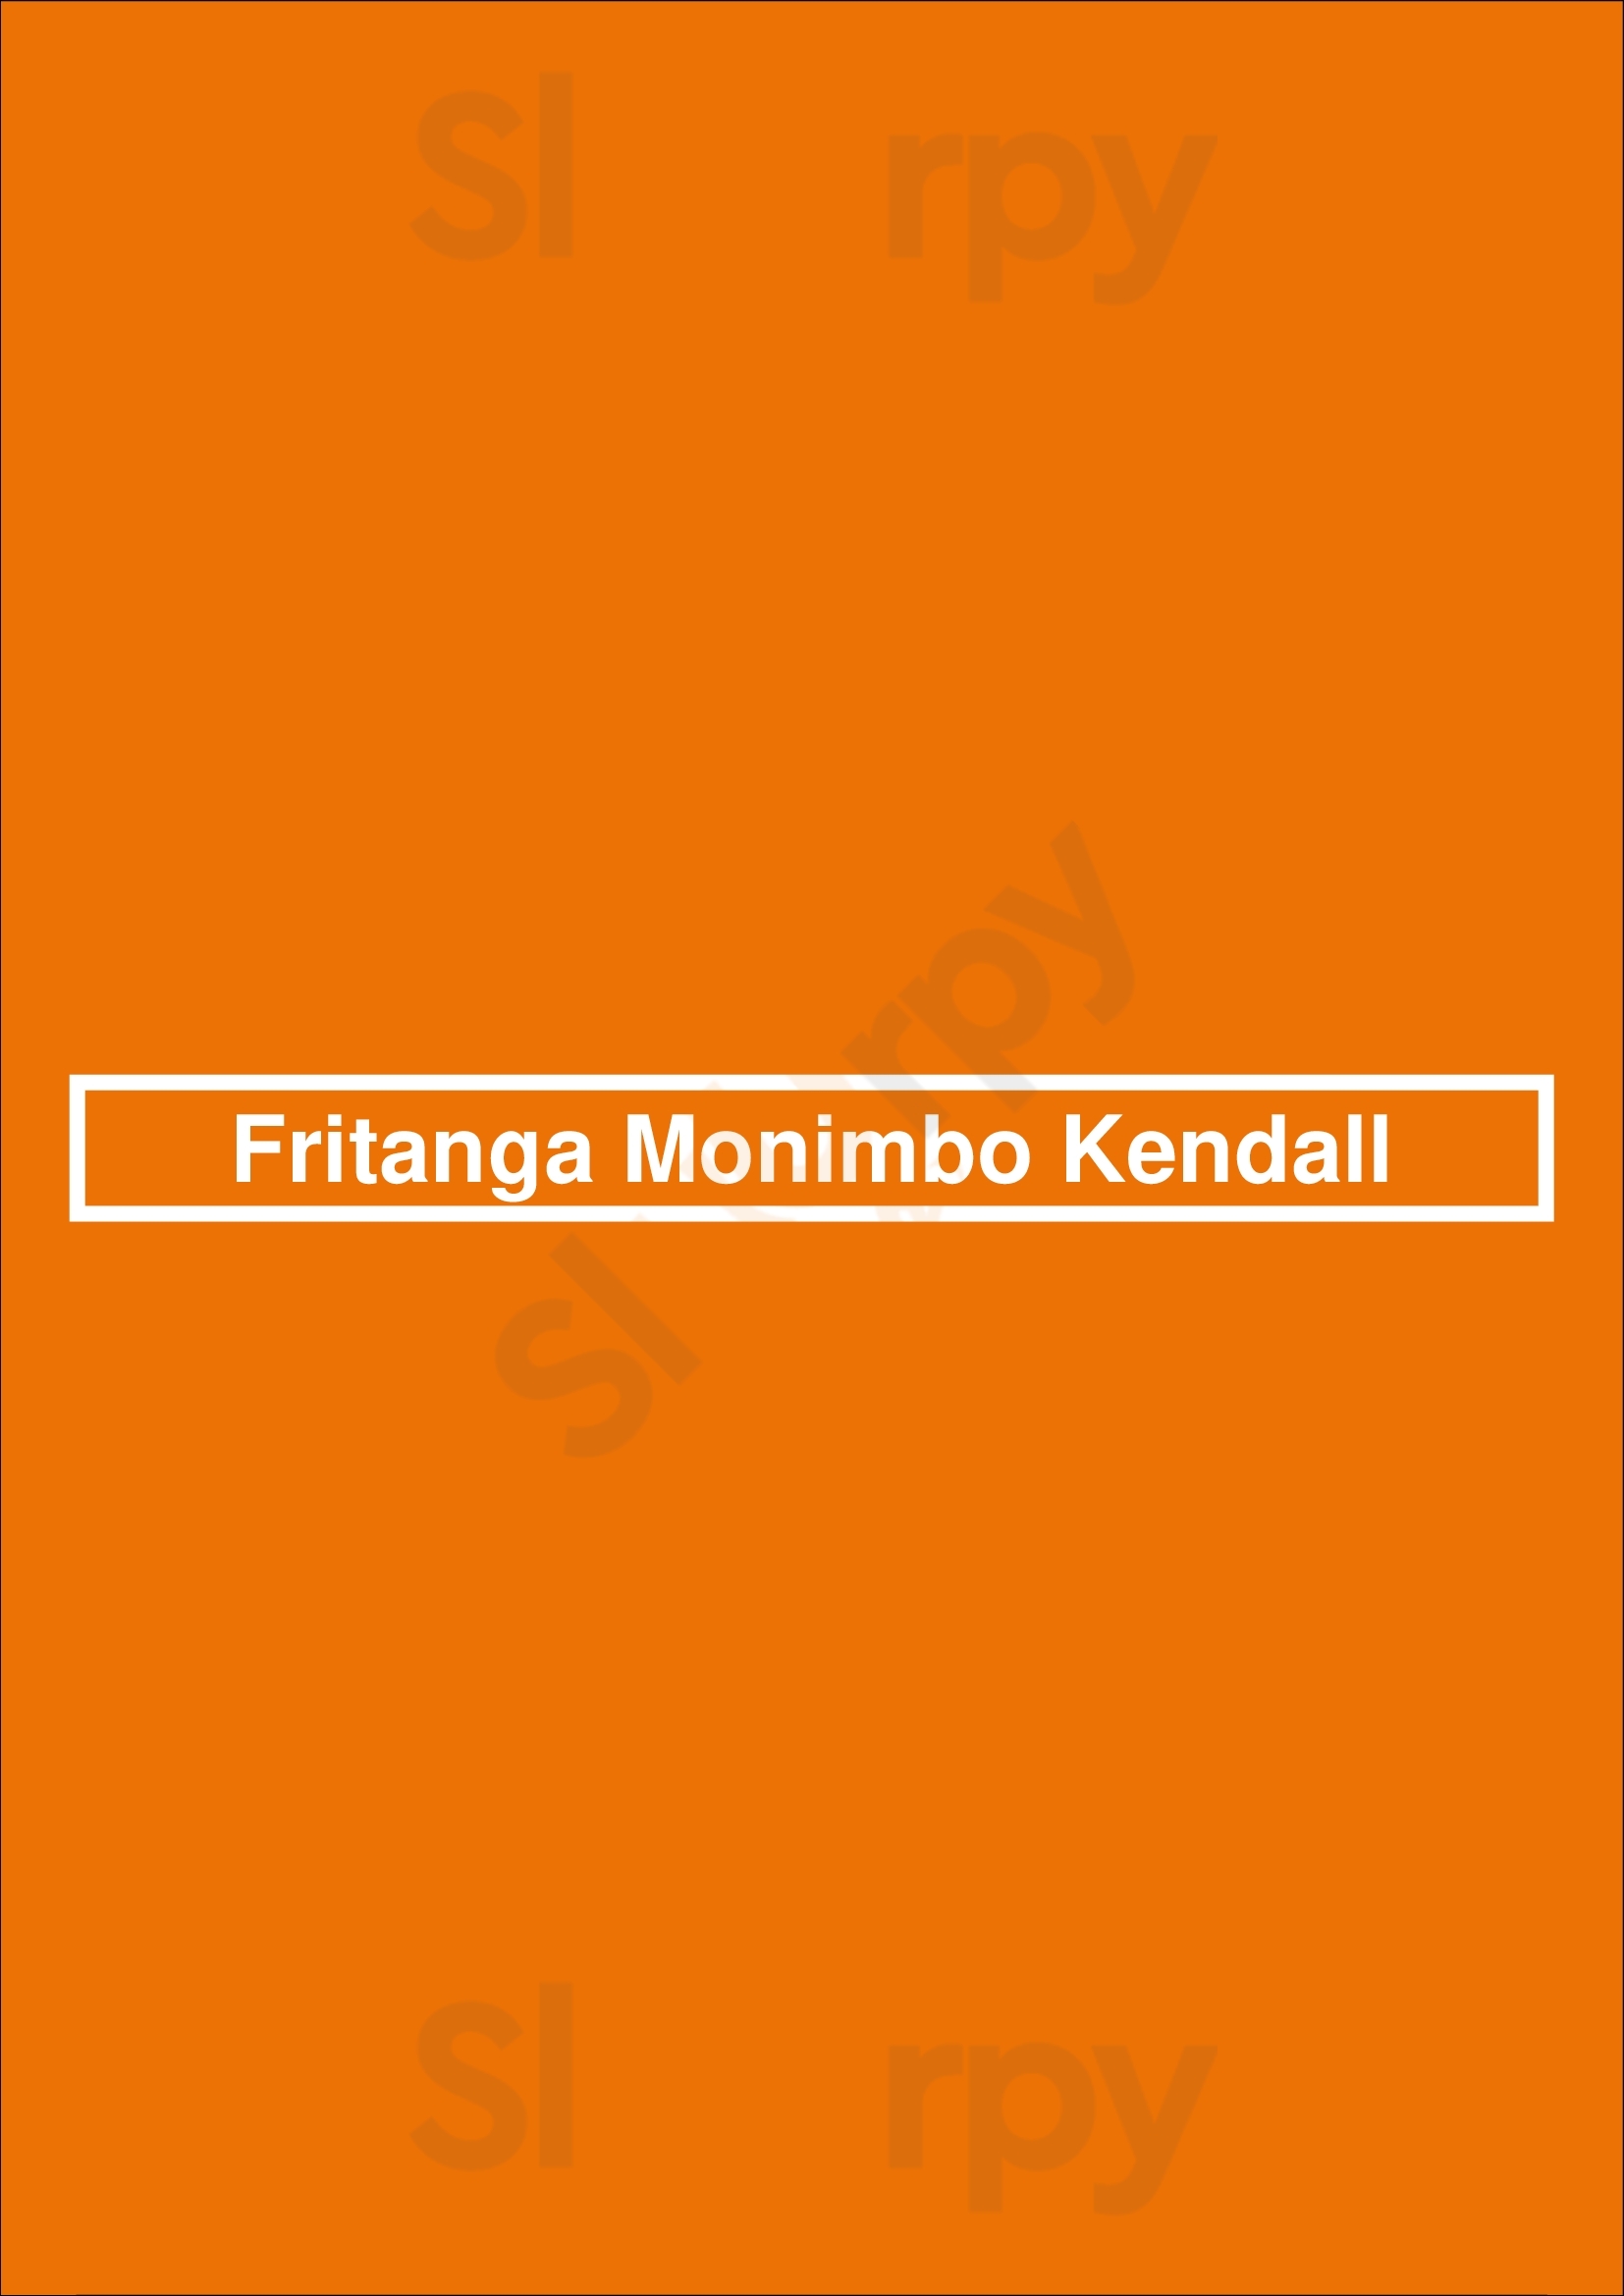 Fritanga Monimbo Kendall Miami Menu - 1